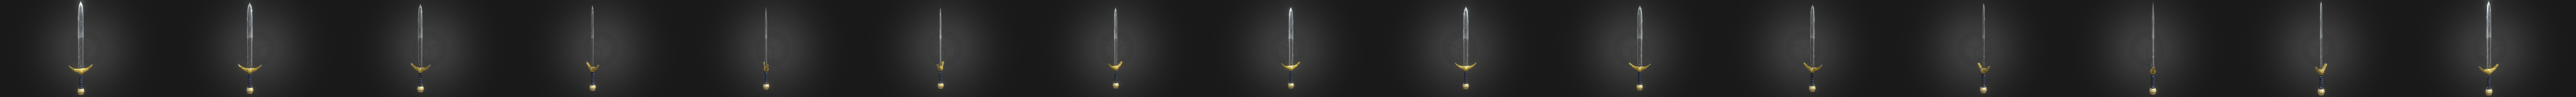 Roblox Linked Sword Remaster Download Free 3d Model By Sir Numb Sirnumb 0326504 - roblox all season sword